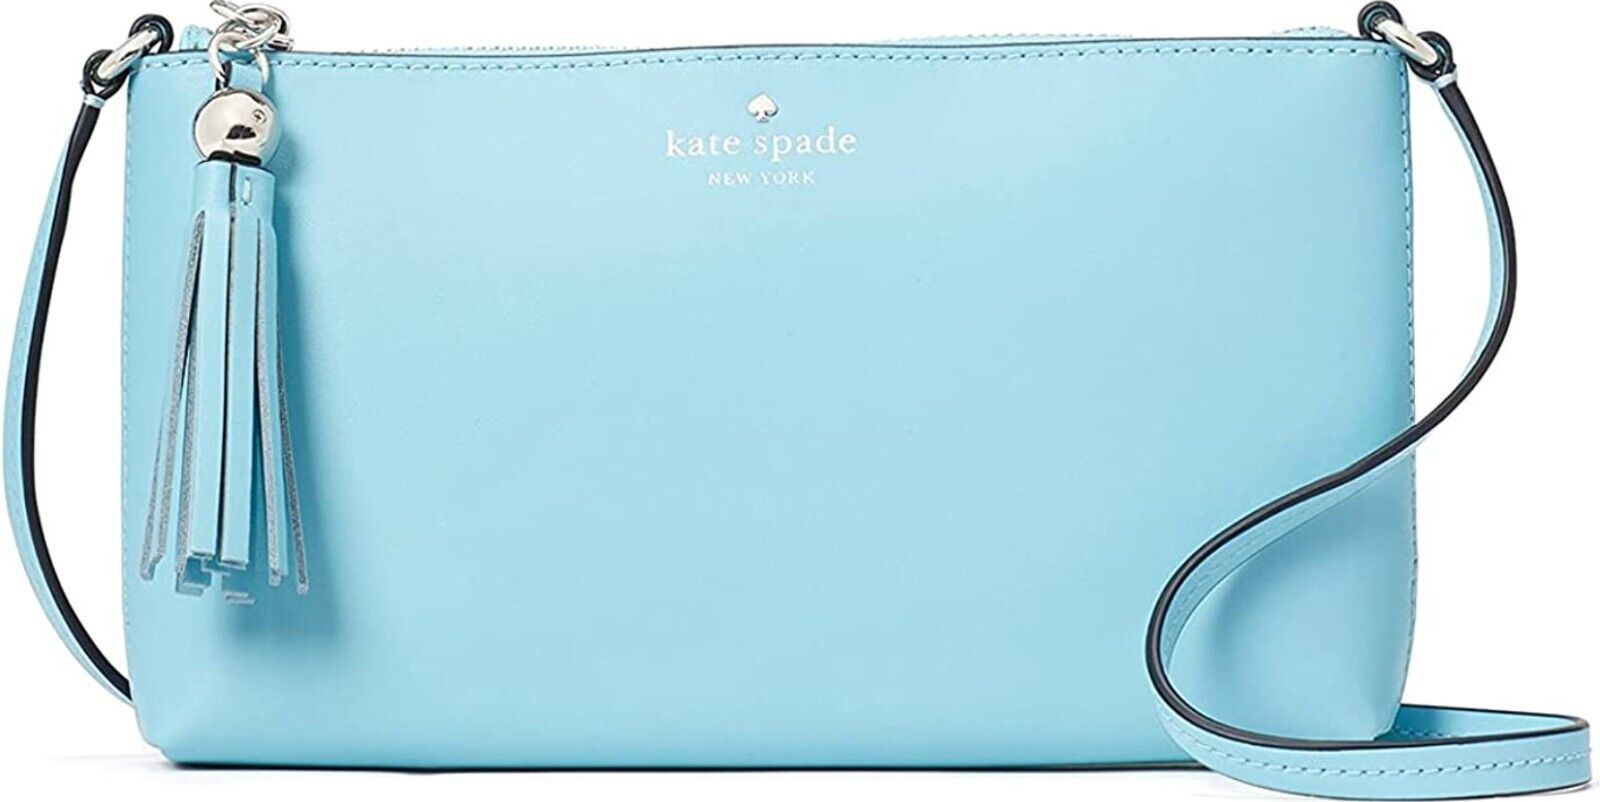 Kate Spade Ivy Street Light Blue Smooth Leather Crossbody WKRU4856 NWT $198 FS